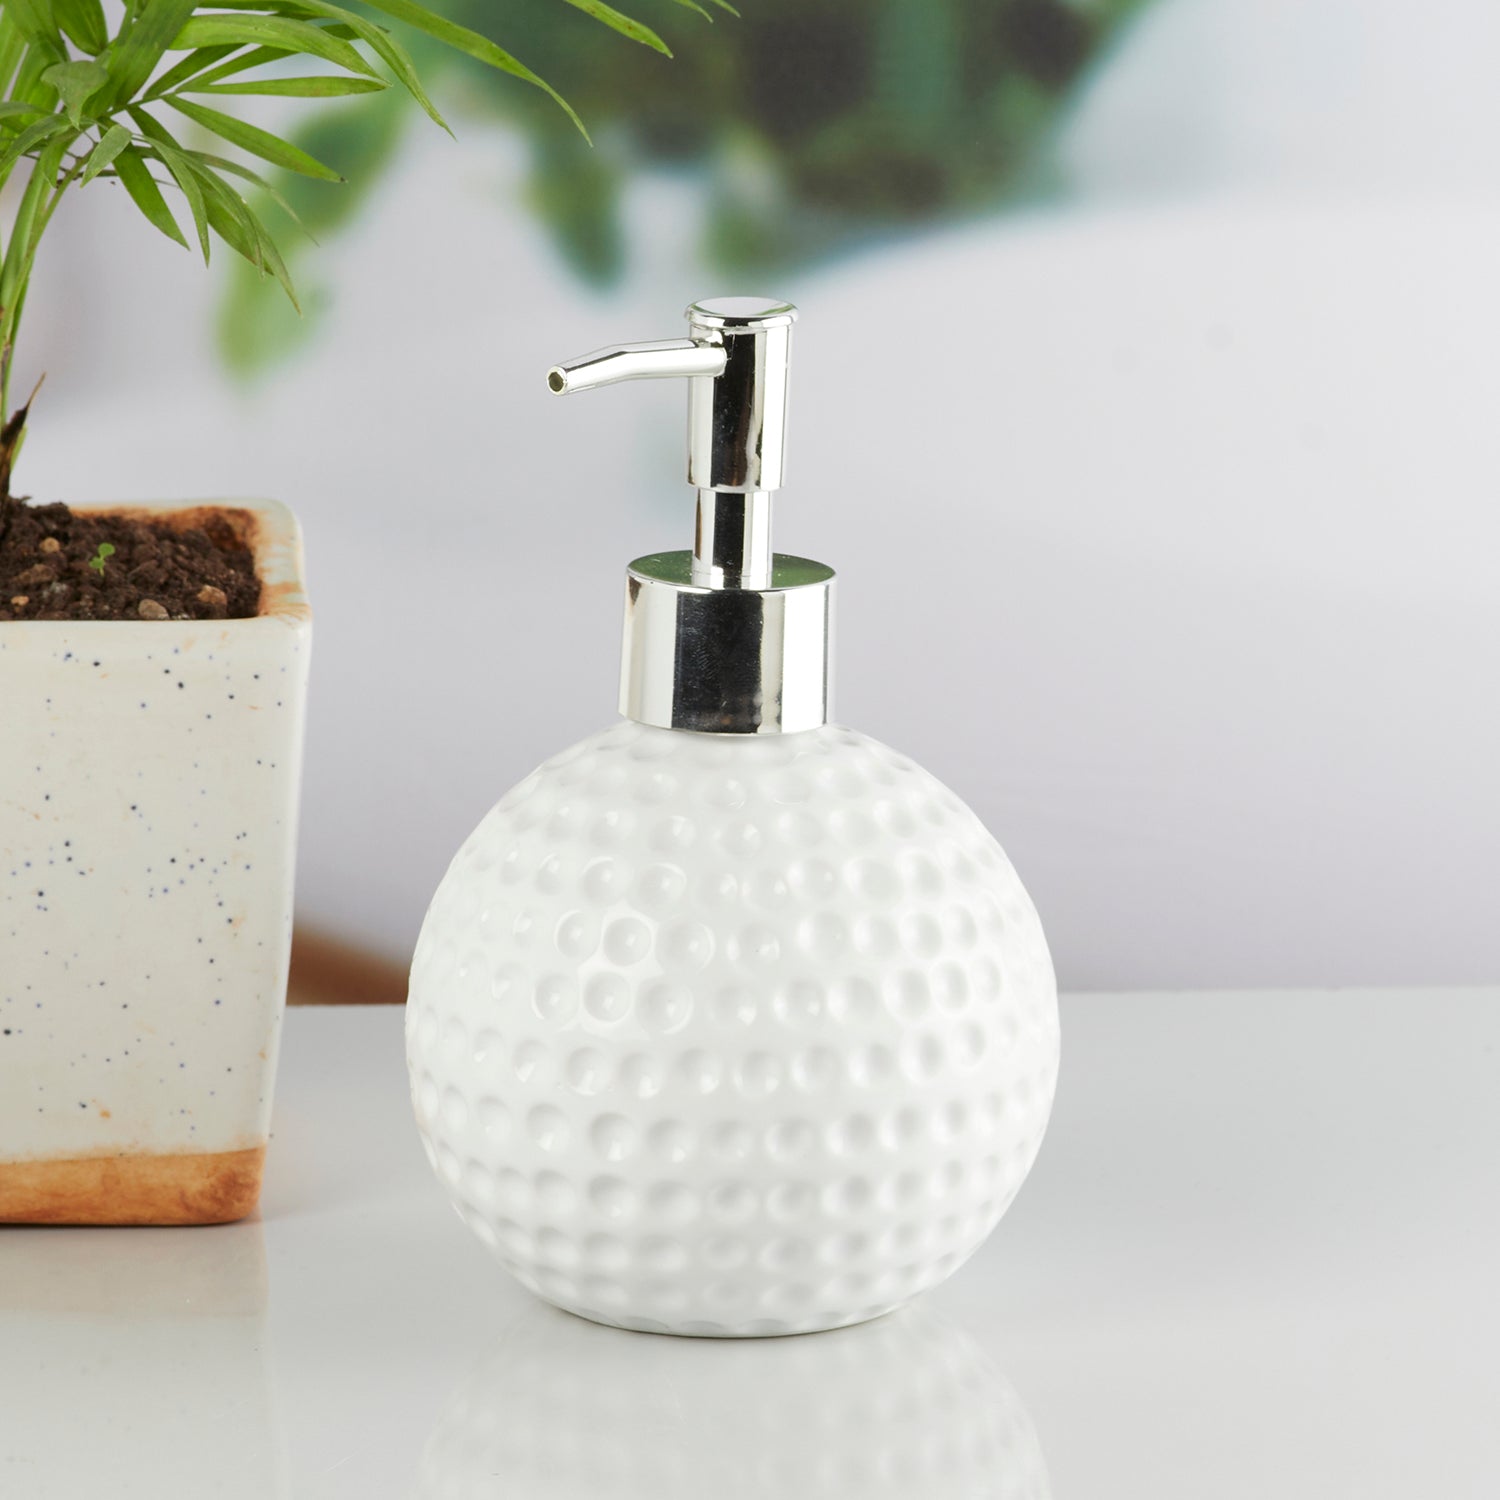 Ceramic Soap Dispenser handwash Pump for Bathroom, Set of 1, White (8653)